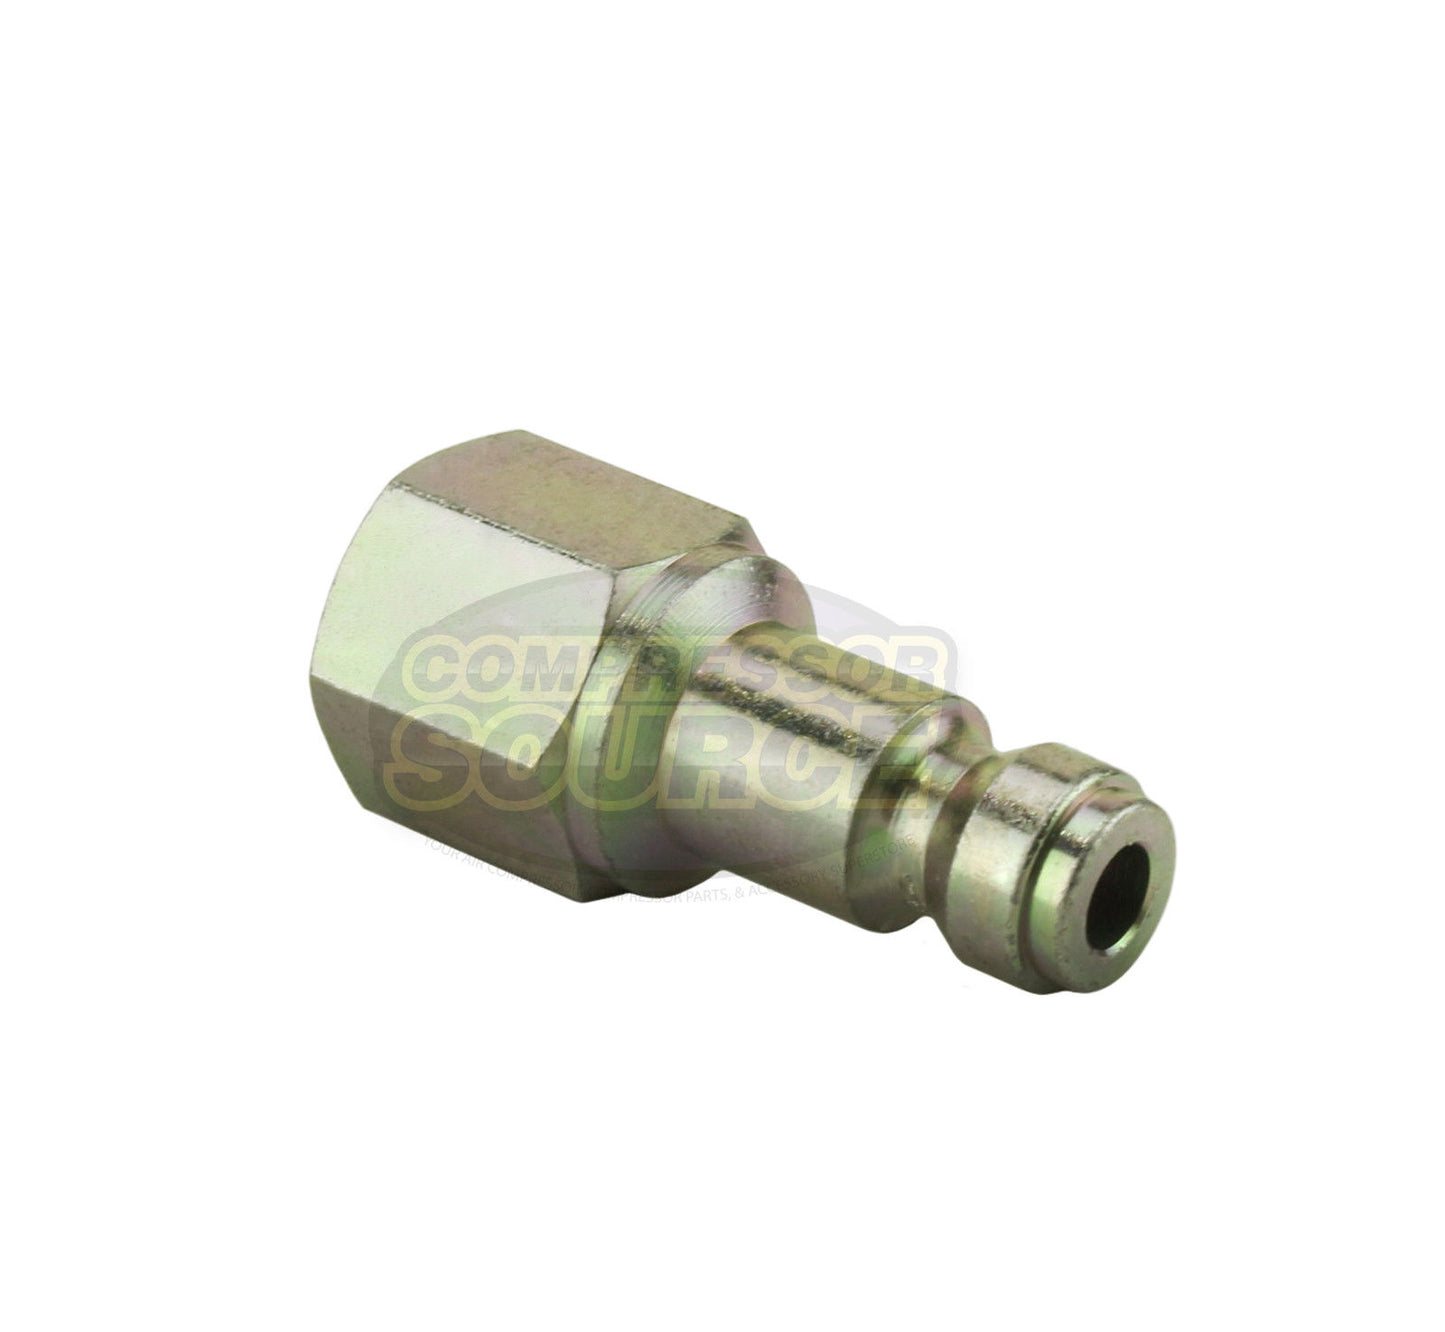 Prevost 1/4" Female NPT Truflate / Automotive Hardened Steel Coupler Plug